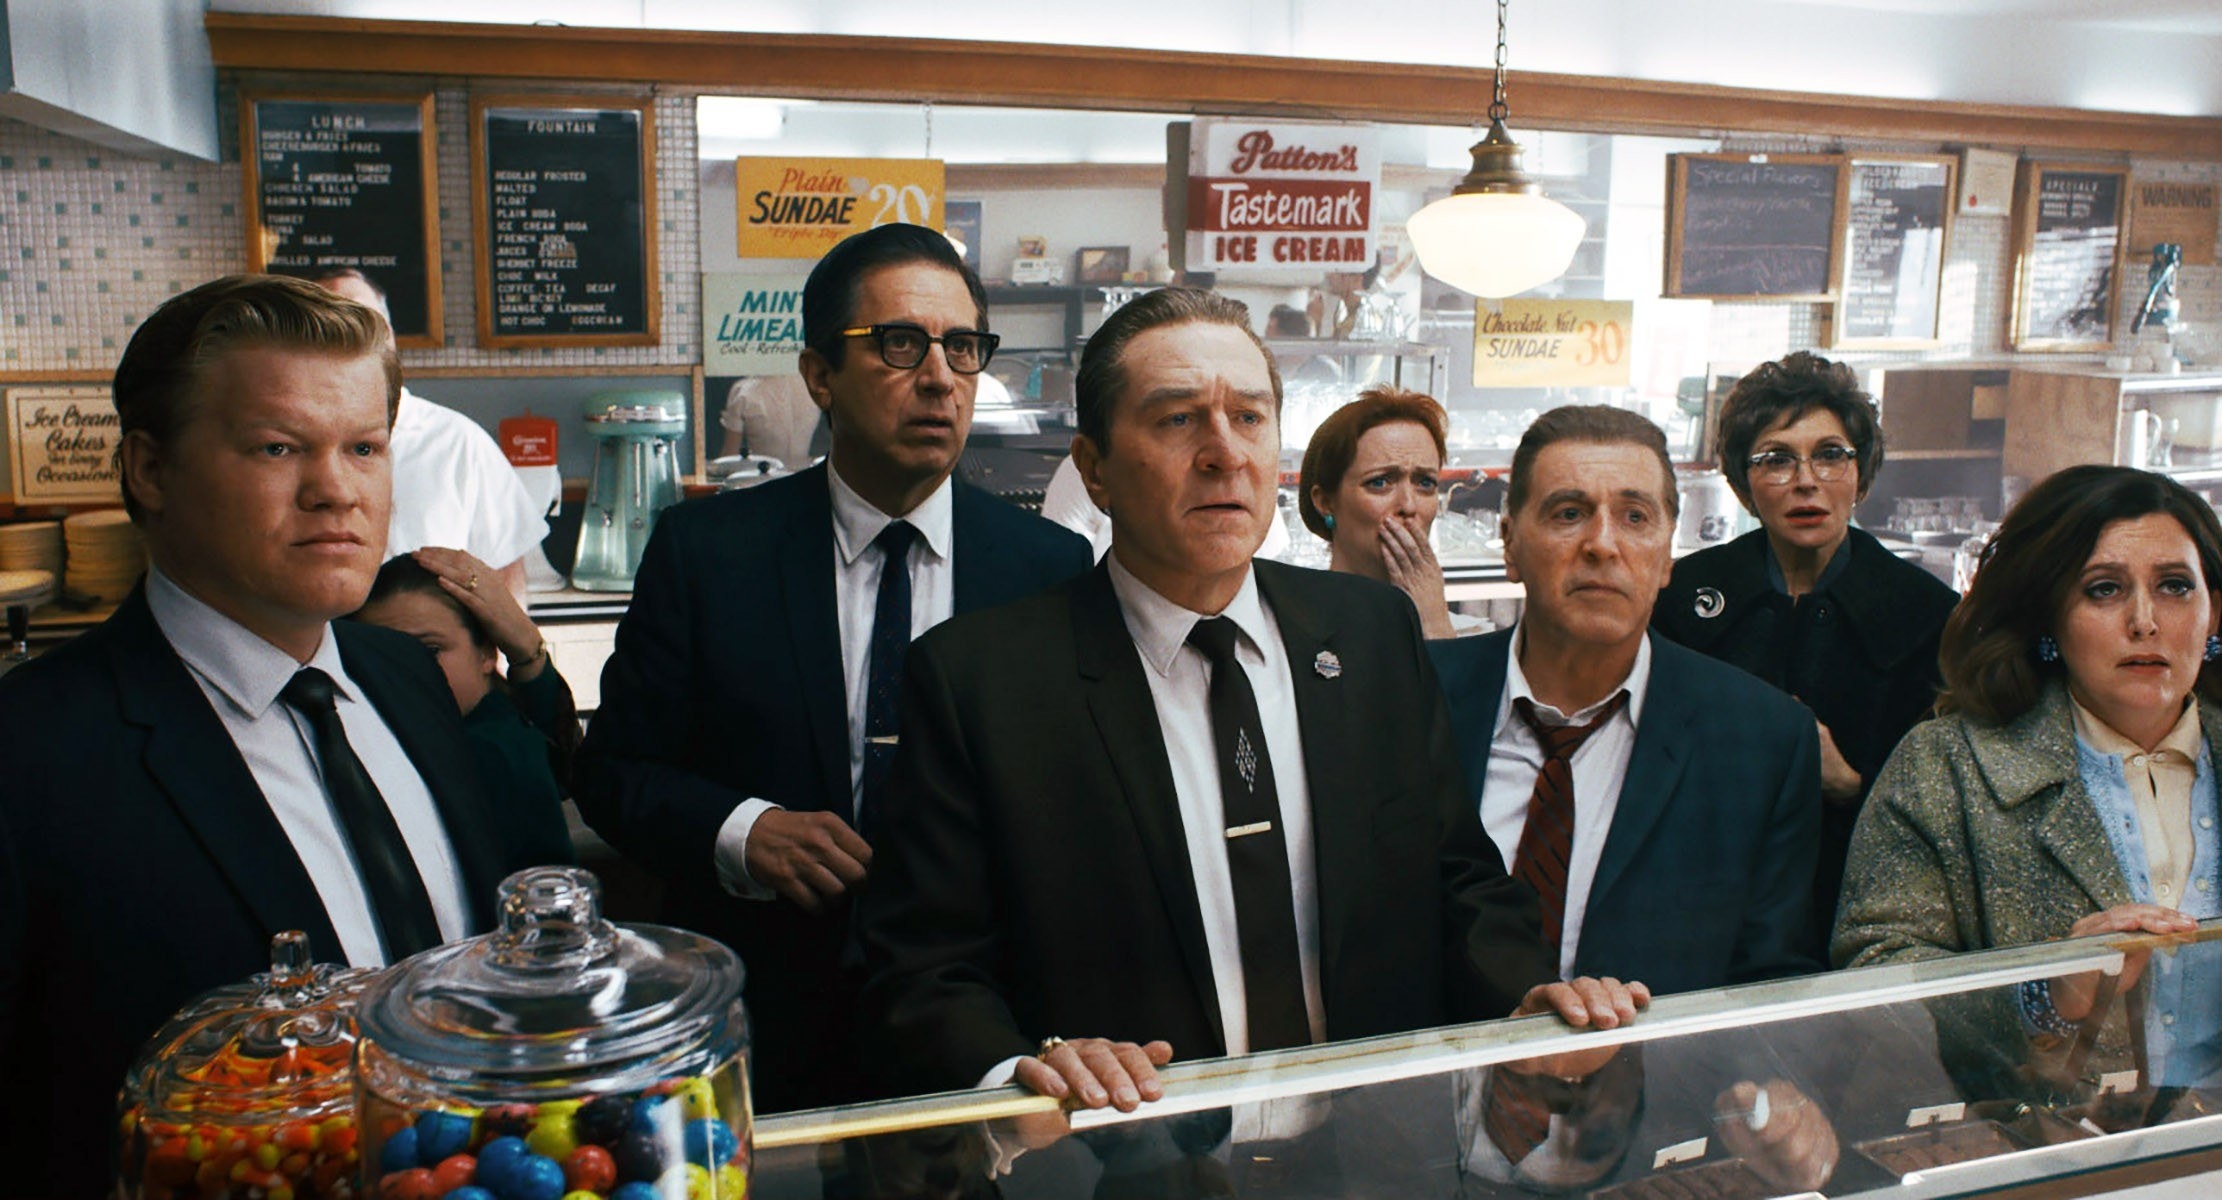 Jesse Plemons, Ray Romano, Robert De Niro, and Al Pacino look concerned.